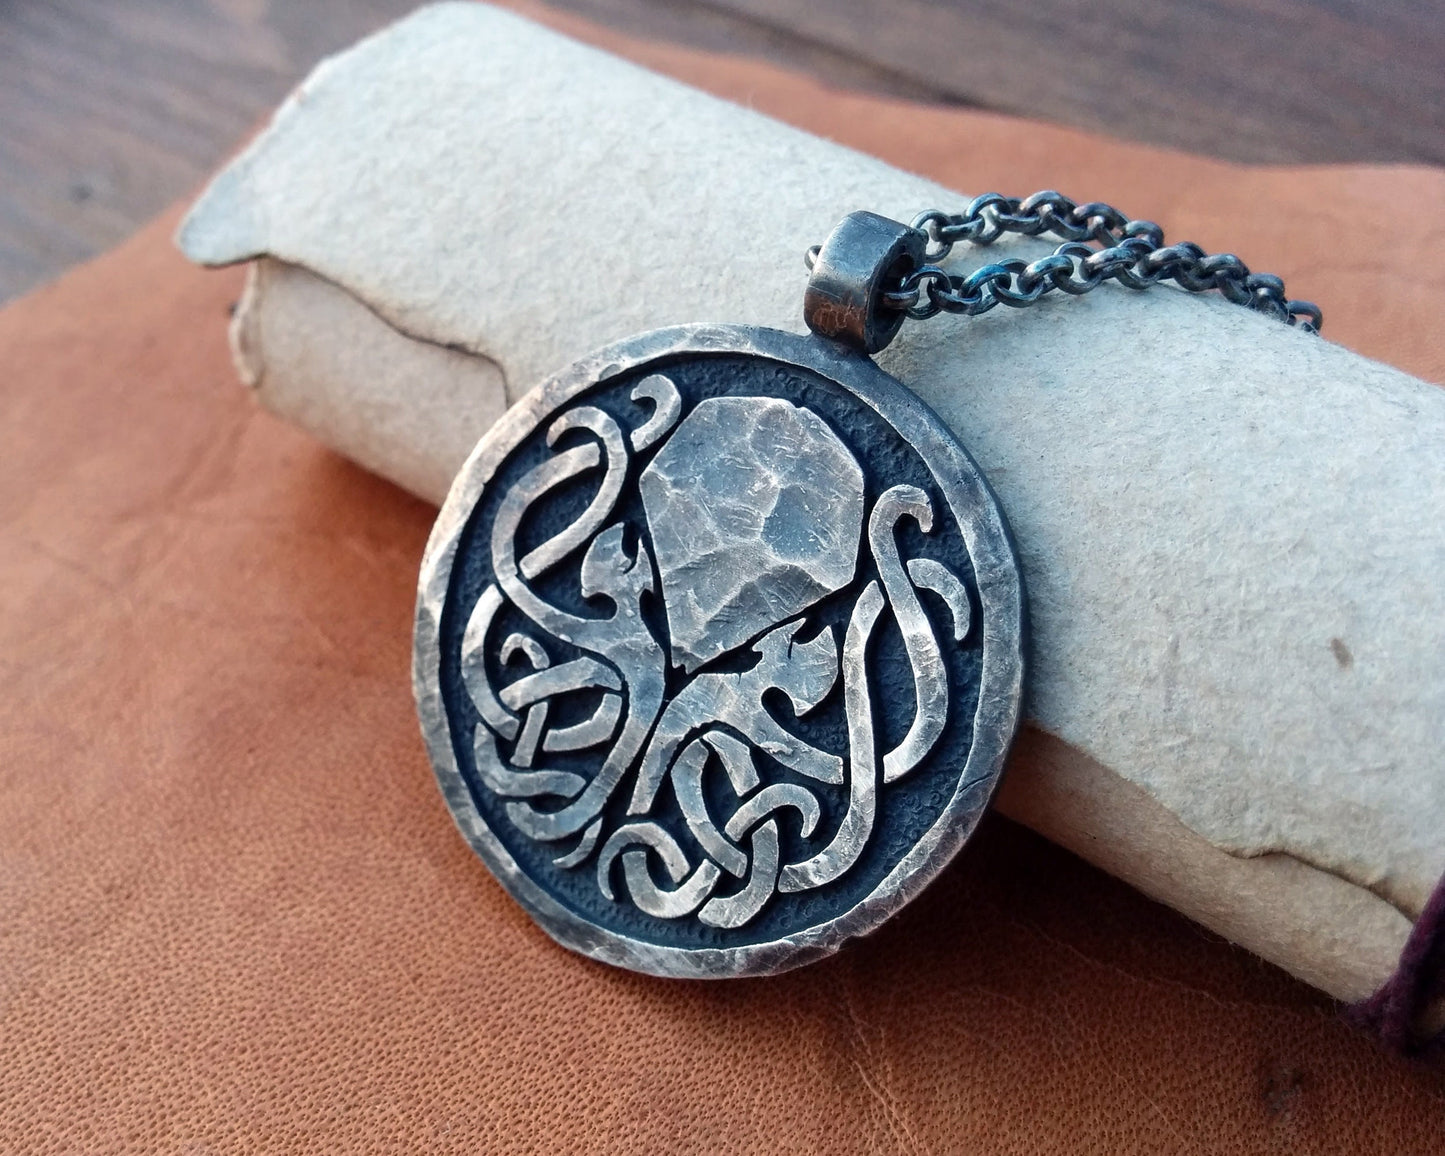 Lovecraft Cthulhu Necklace Pendant Amulet Jewelry - Baldur Jewelry